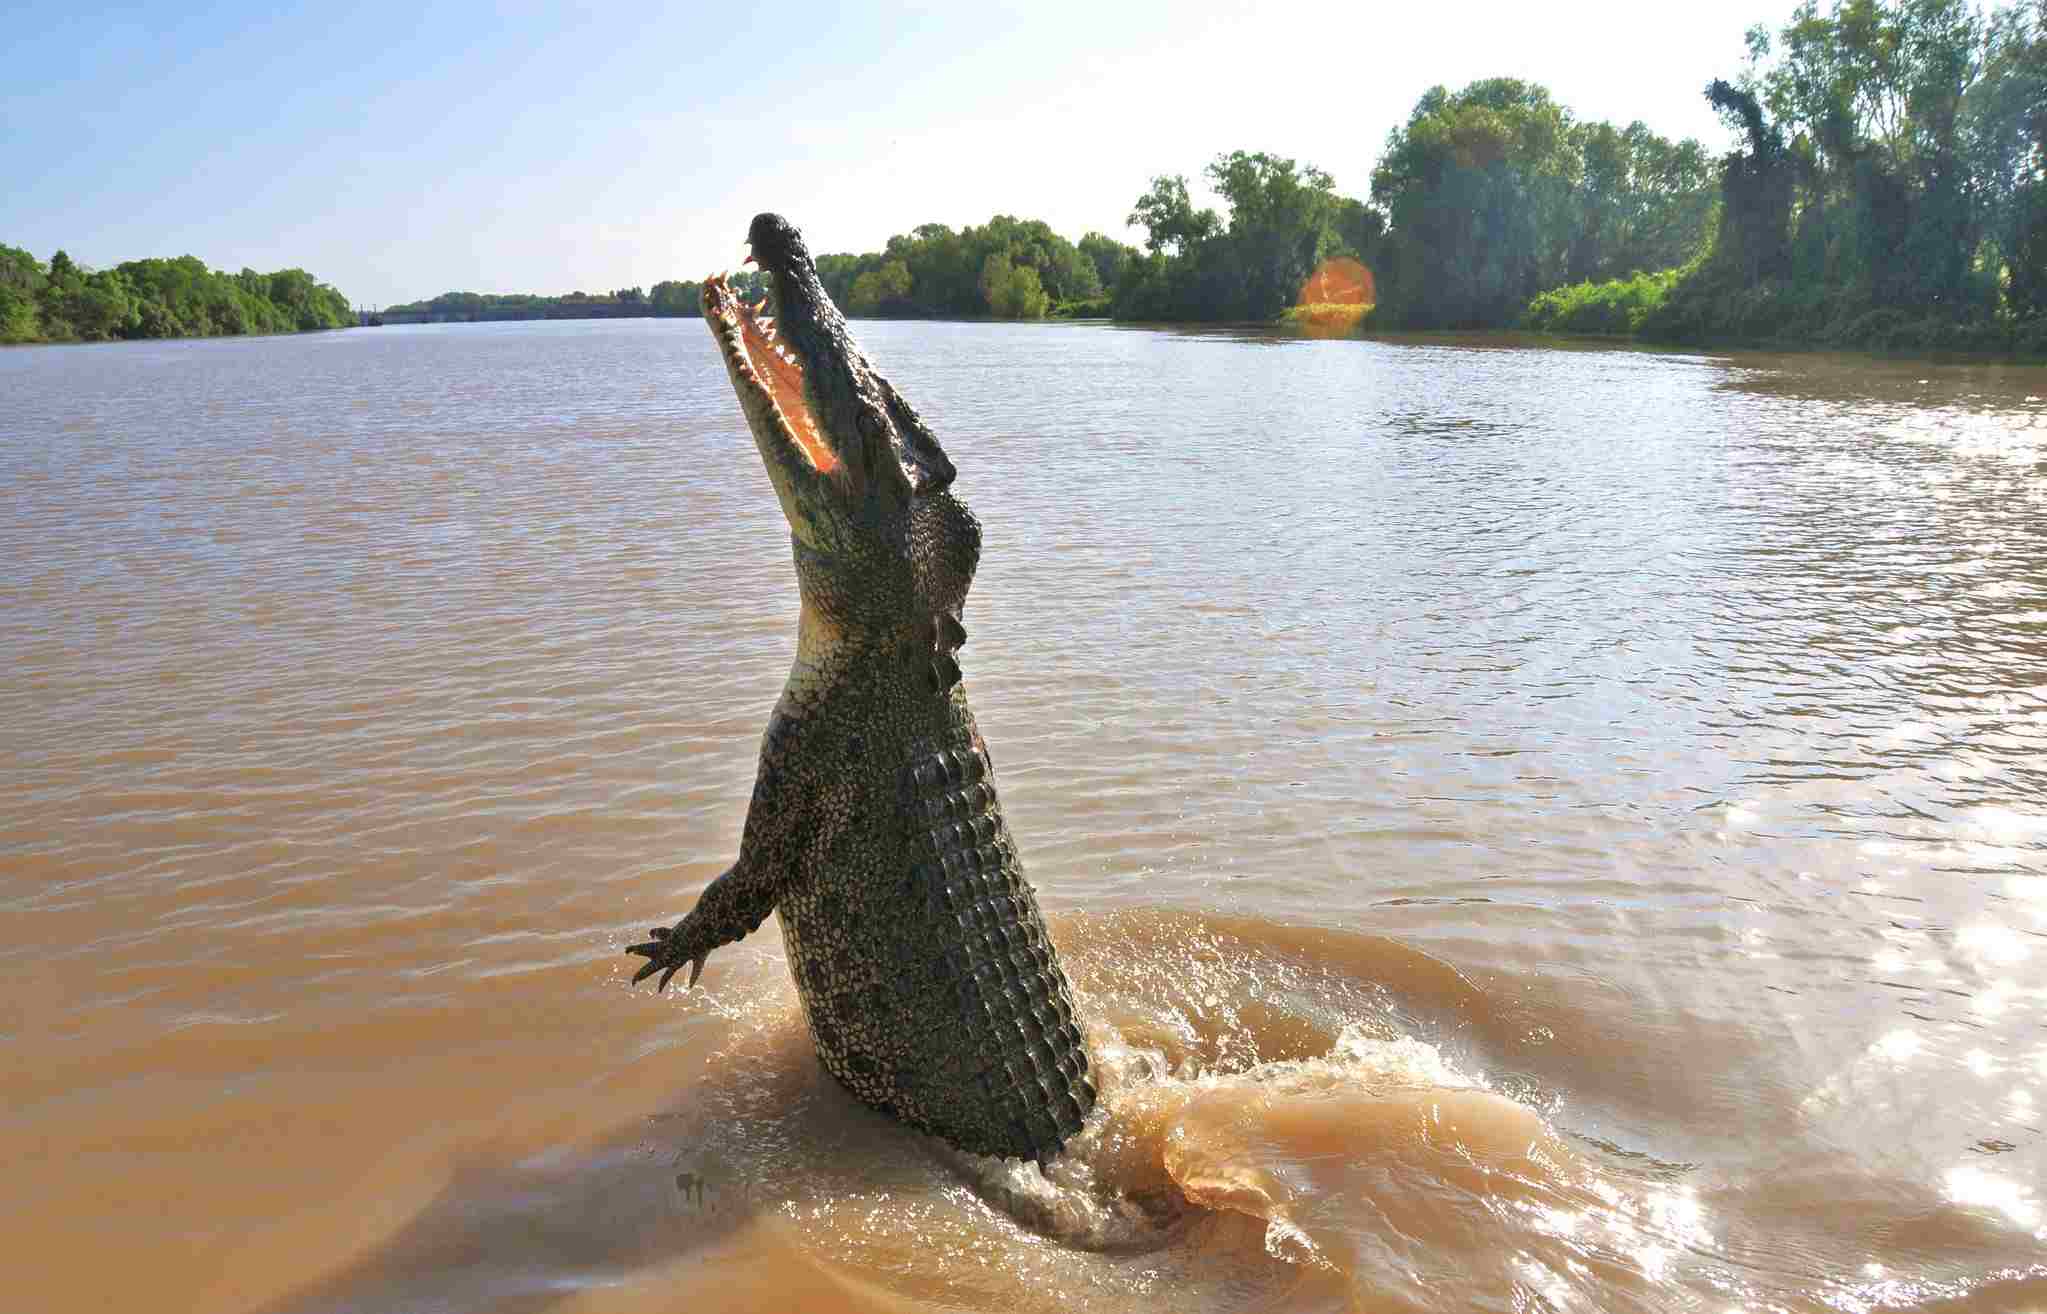 Alligator Vs Saltwater Crocodile